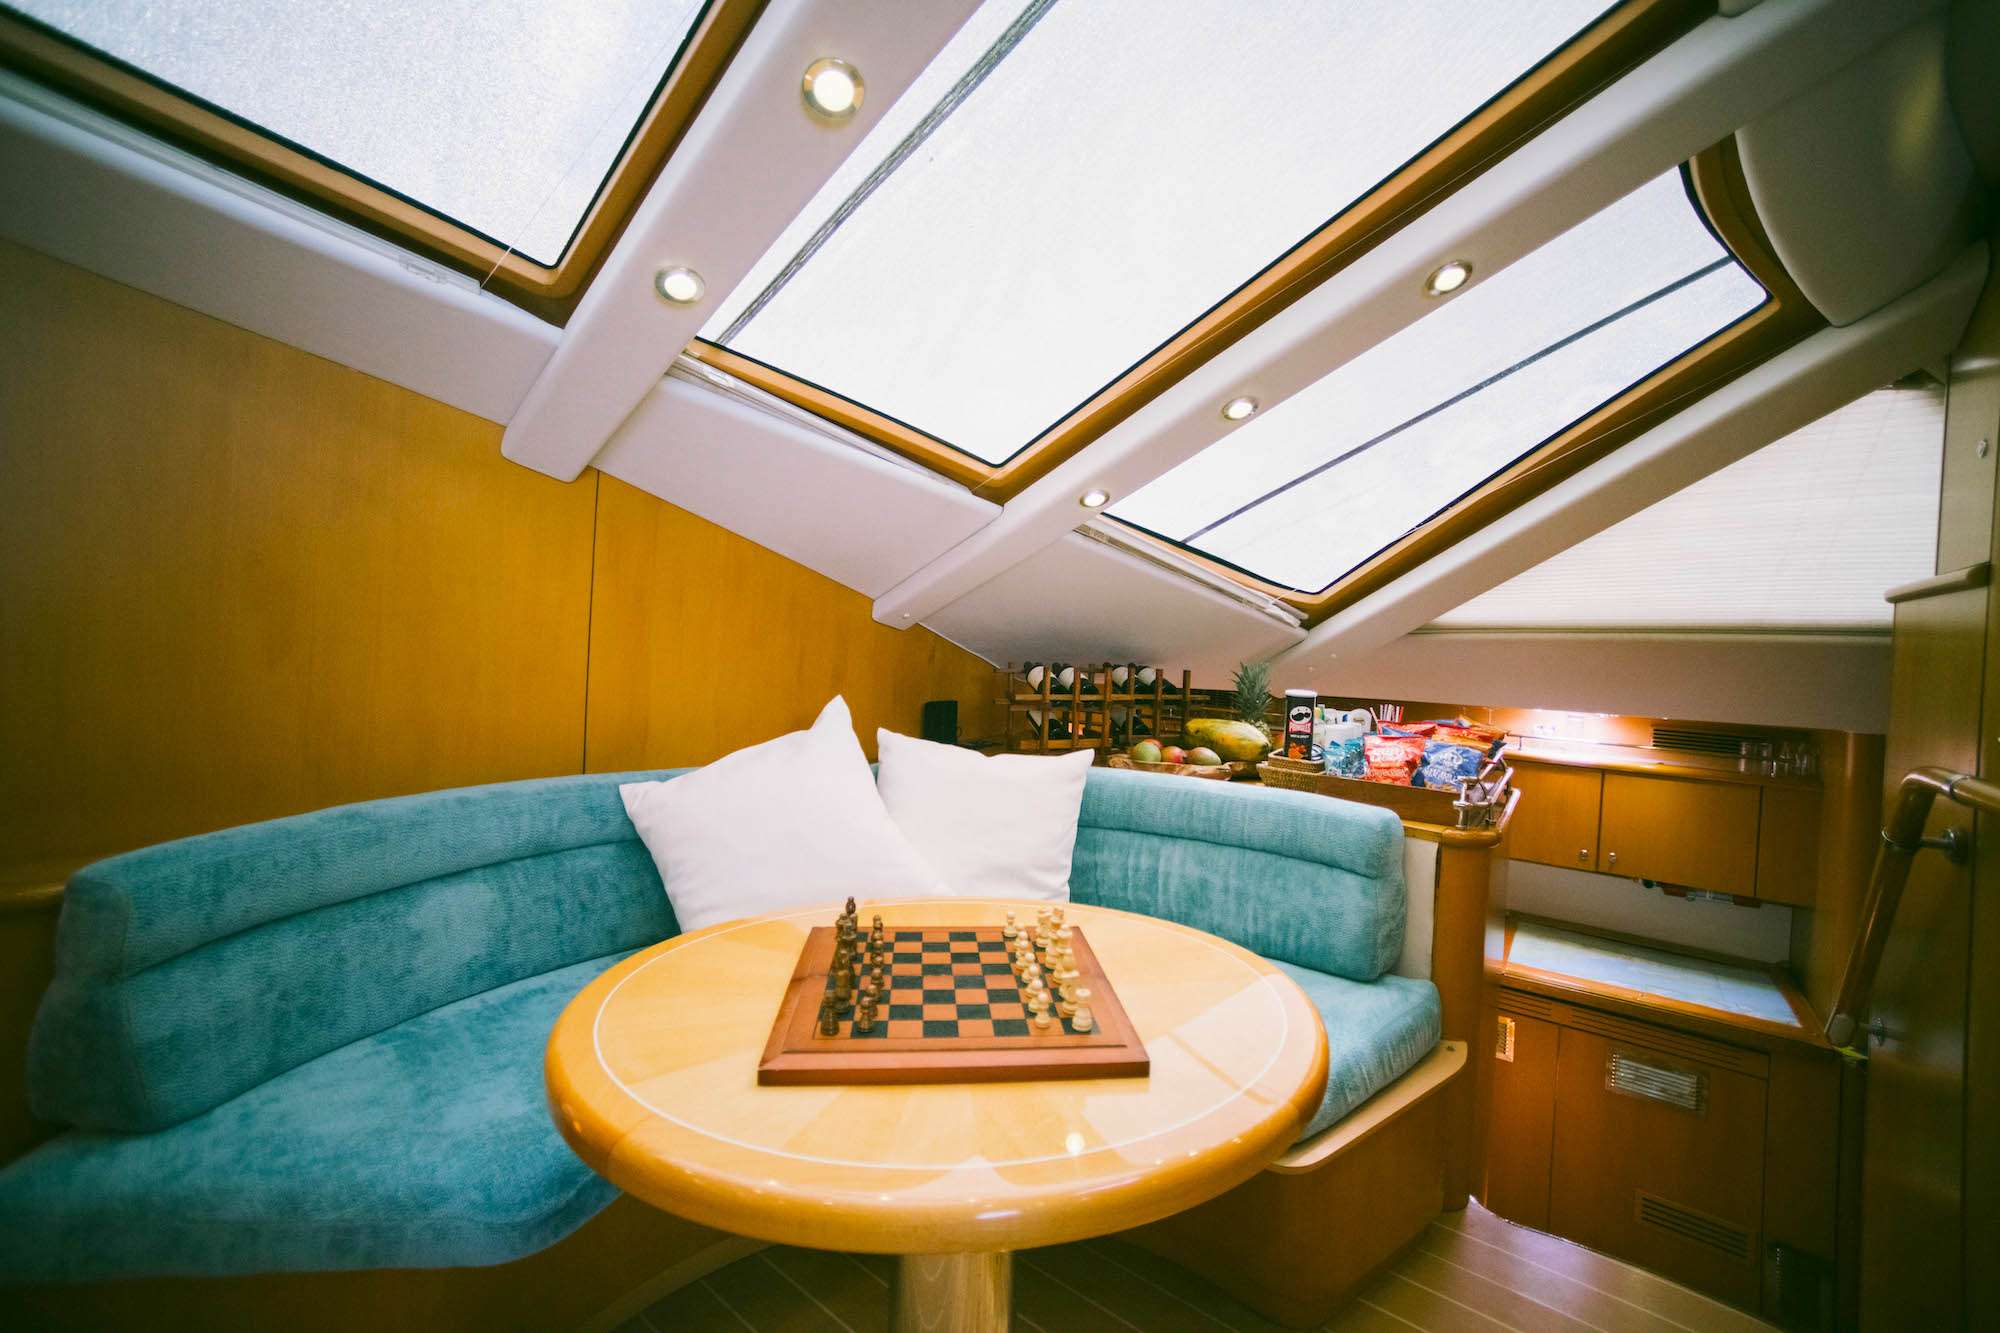 KELEA Yacht Charter - The "conversation" settee